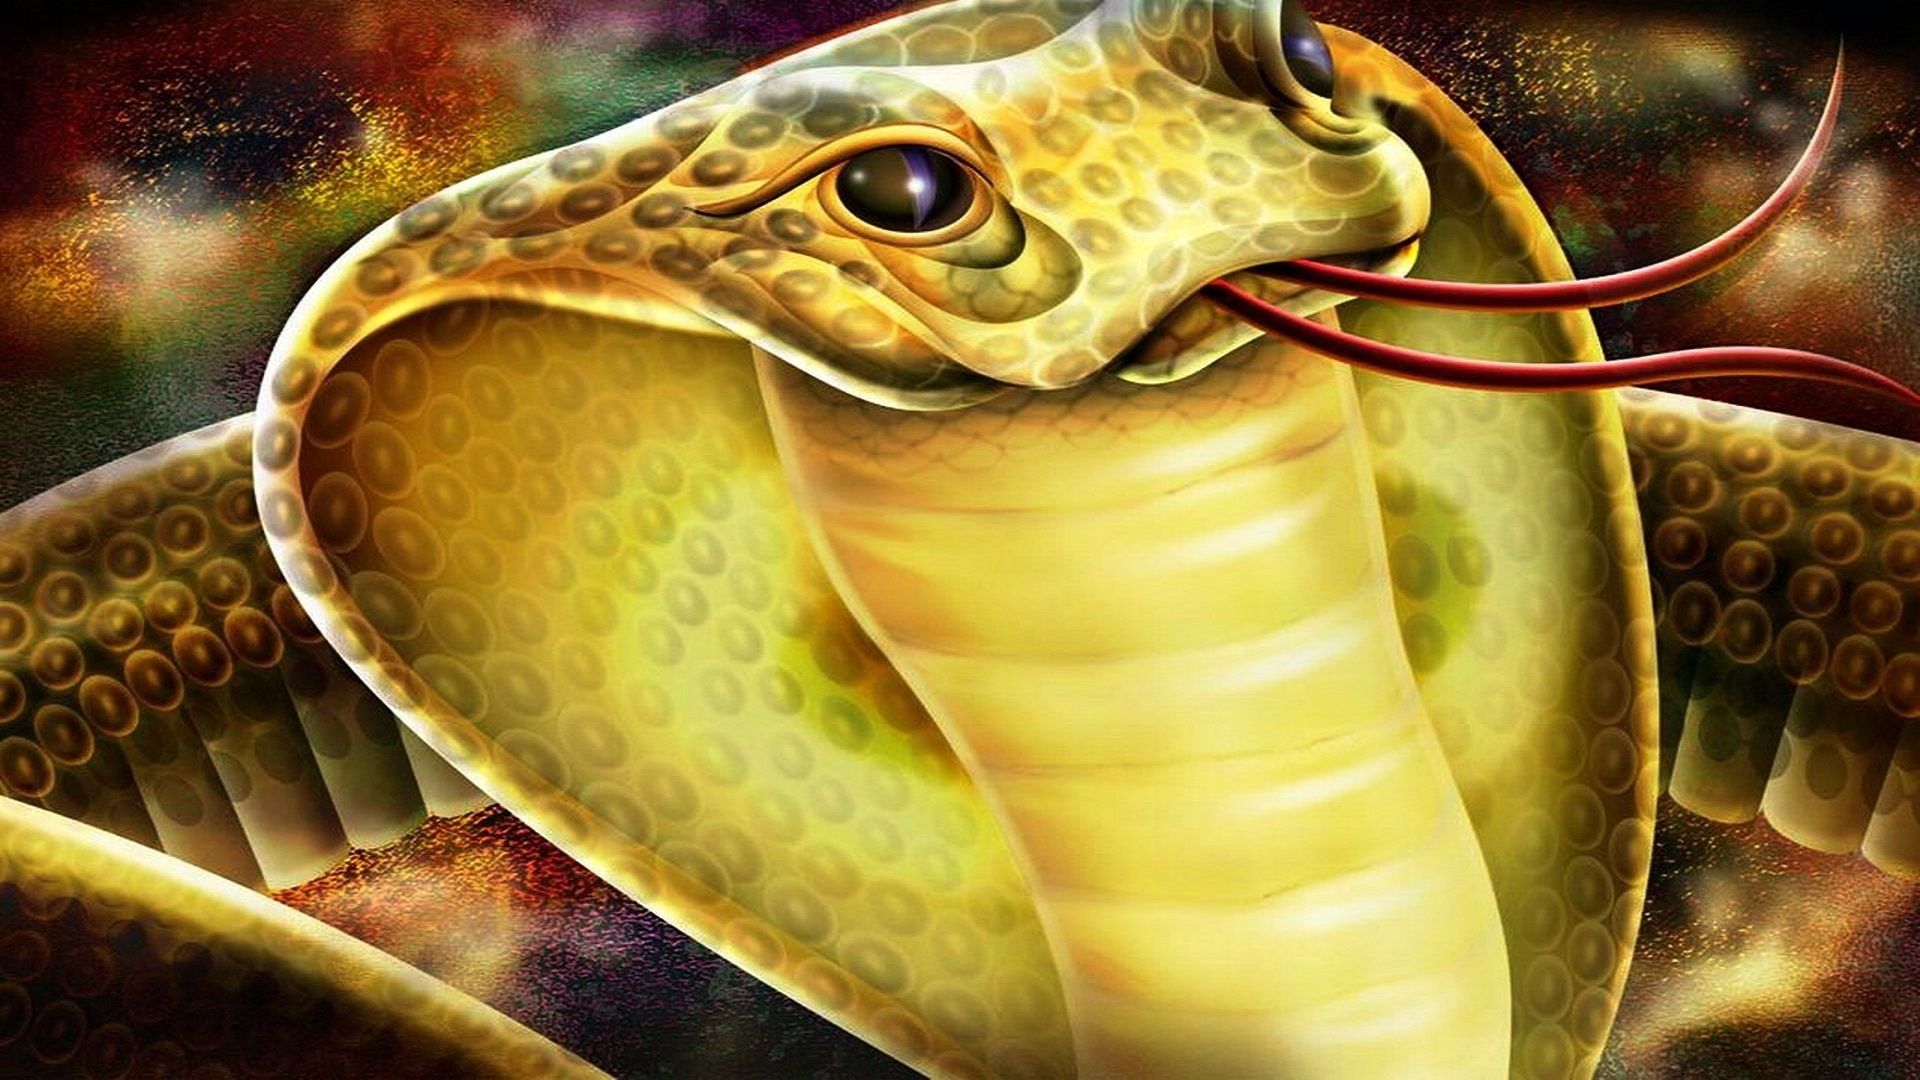 All Snake Images King Kobra Hd - HD Wallpaper 